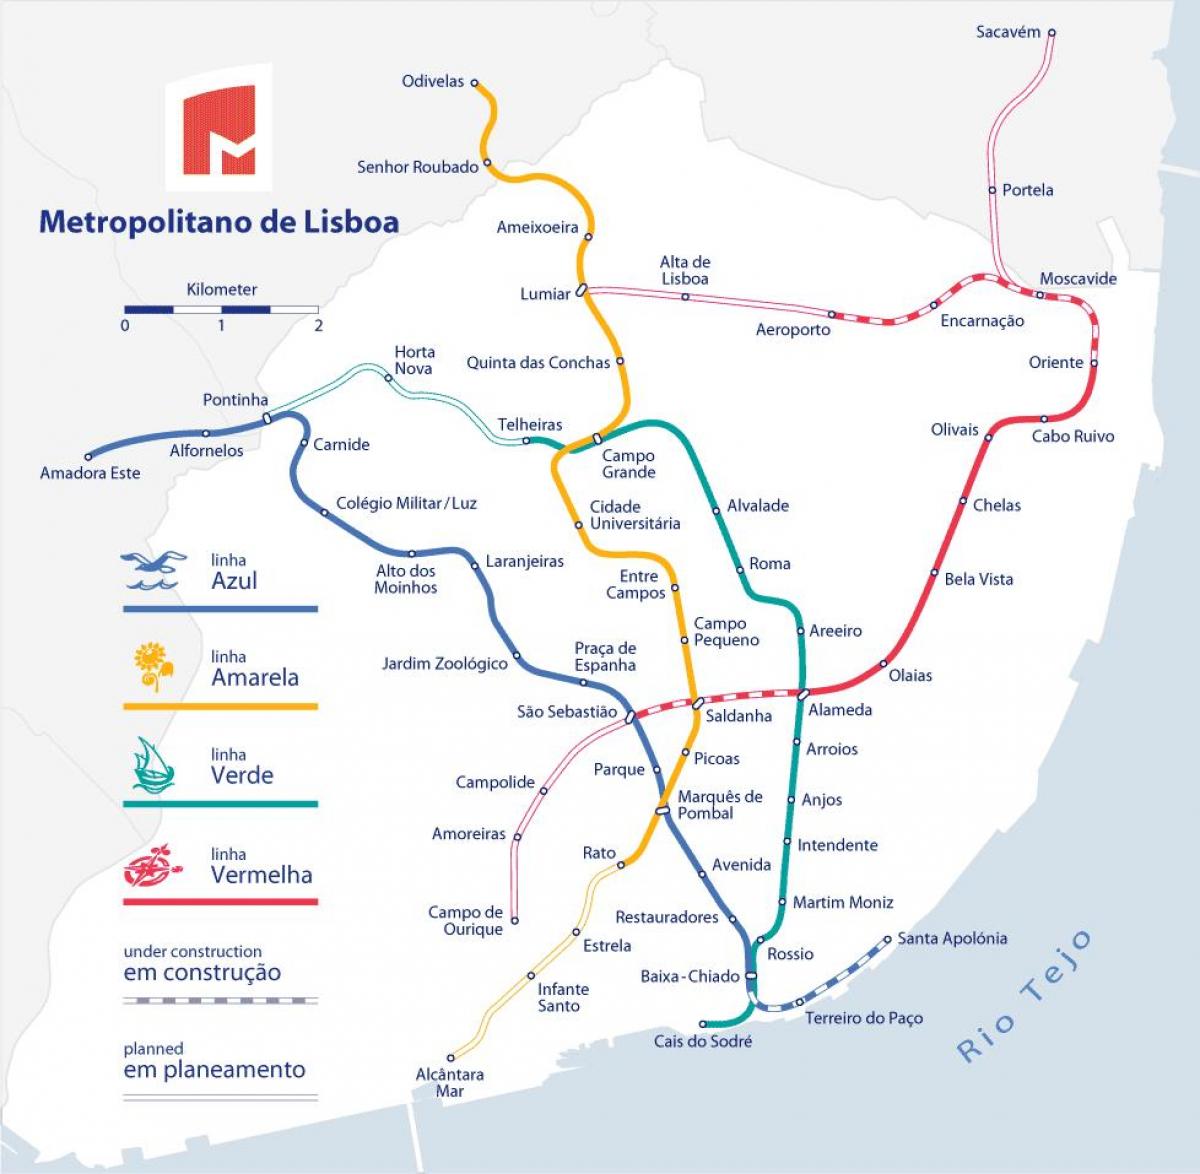 Lisbon subway station map